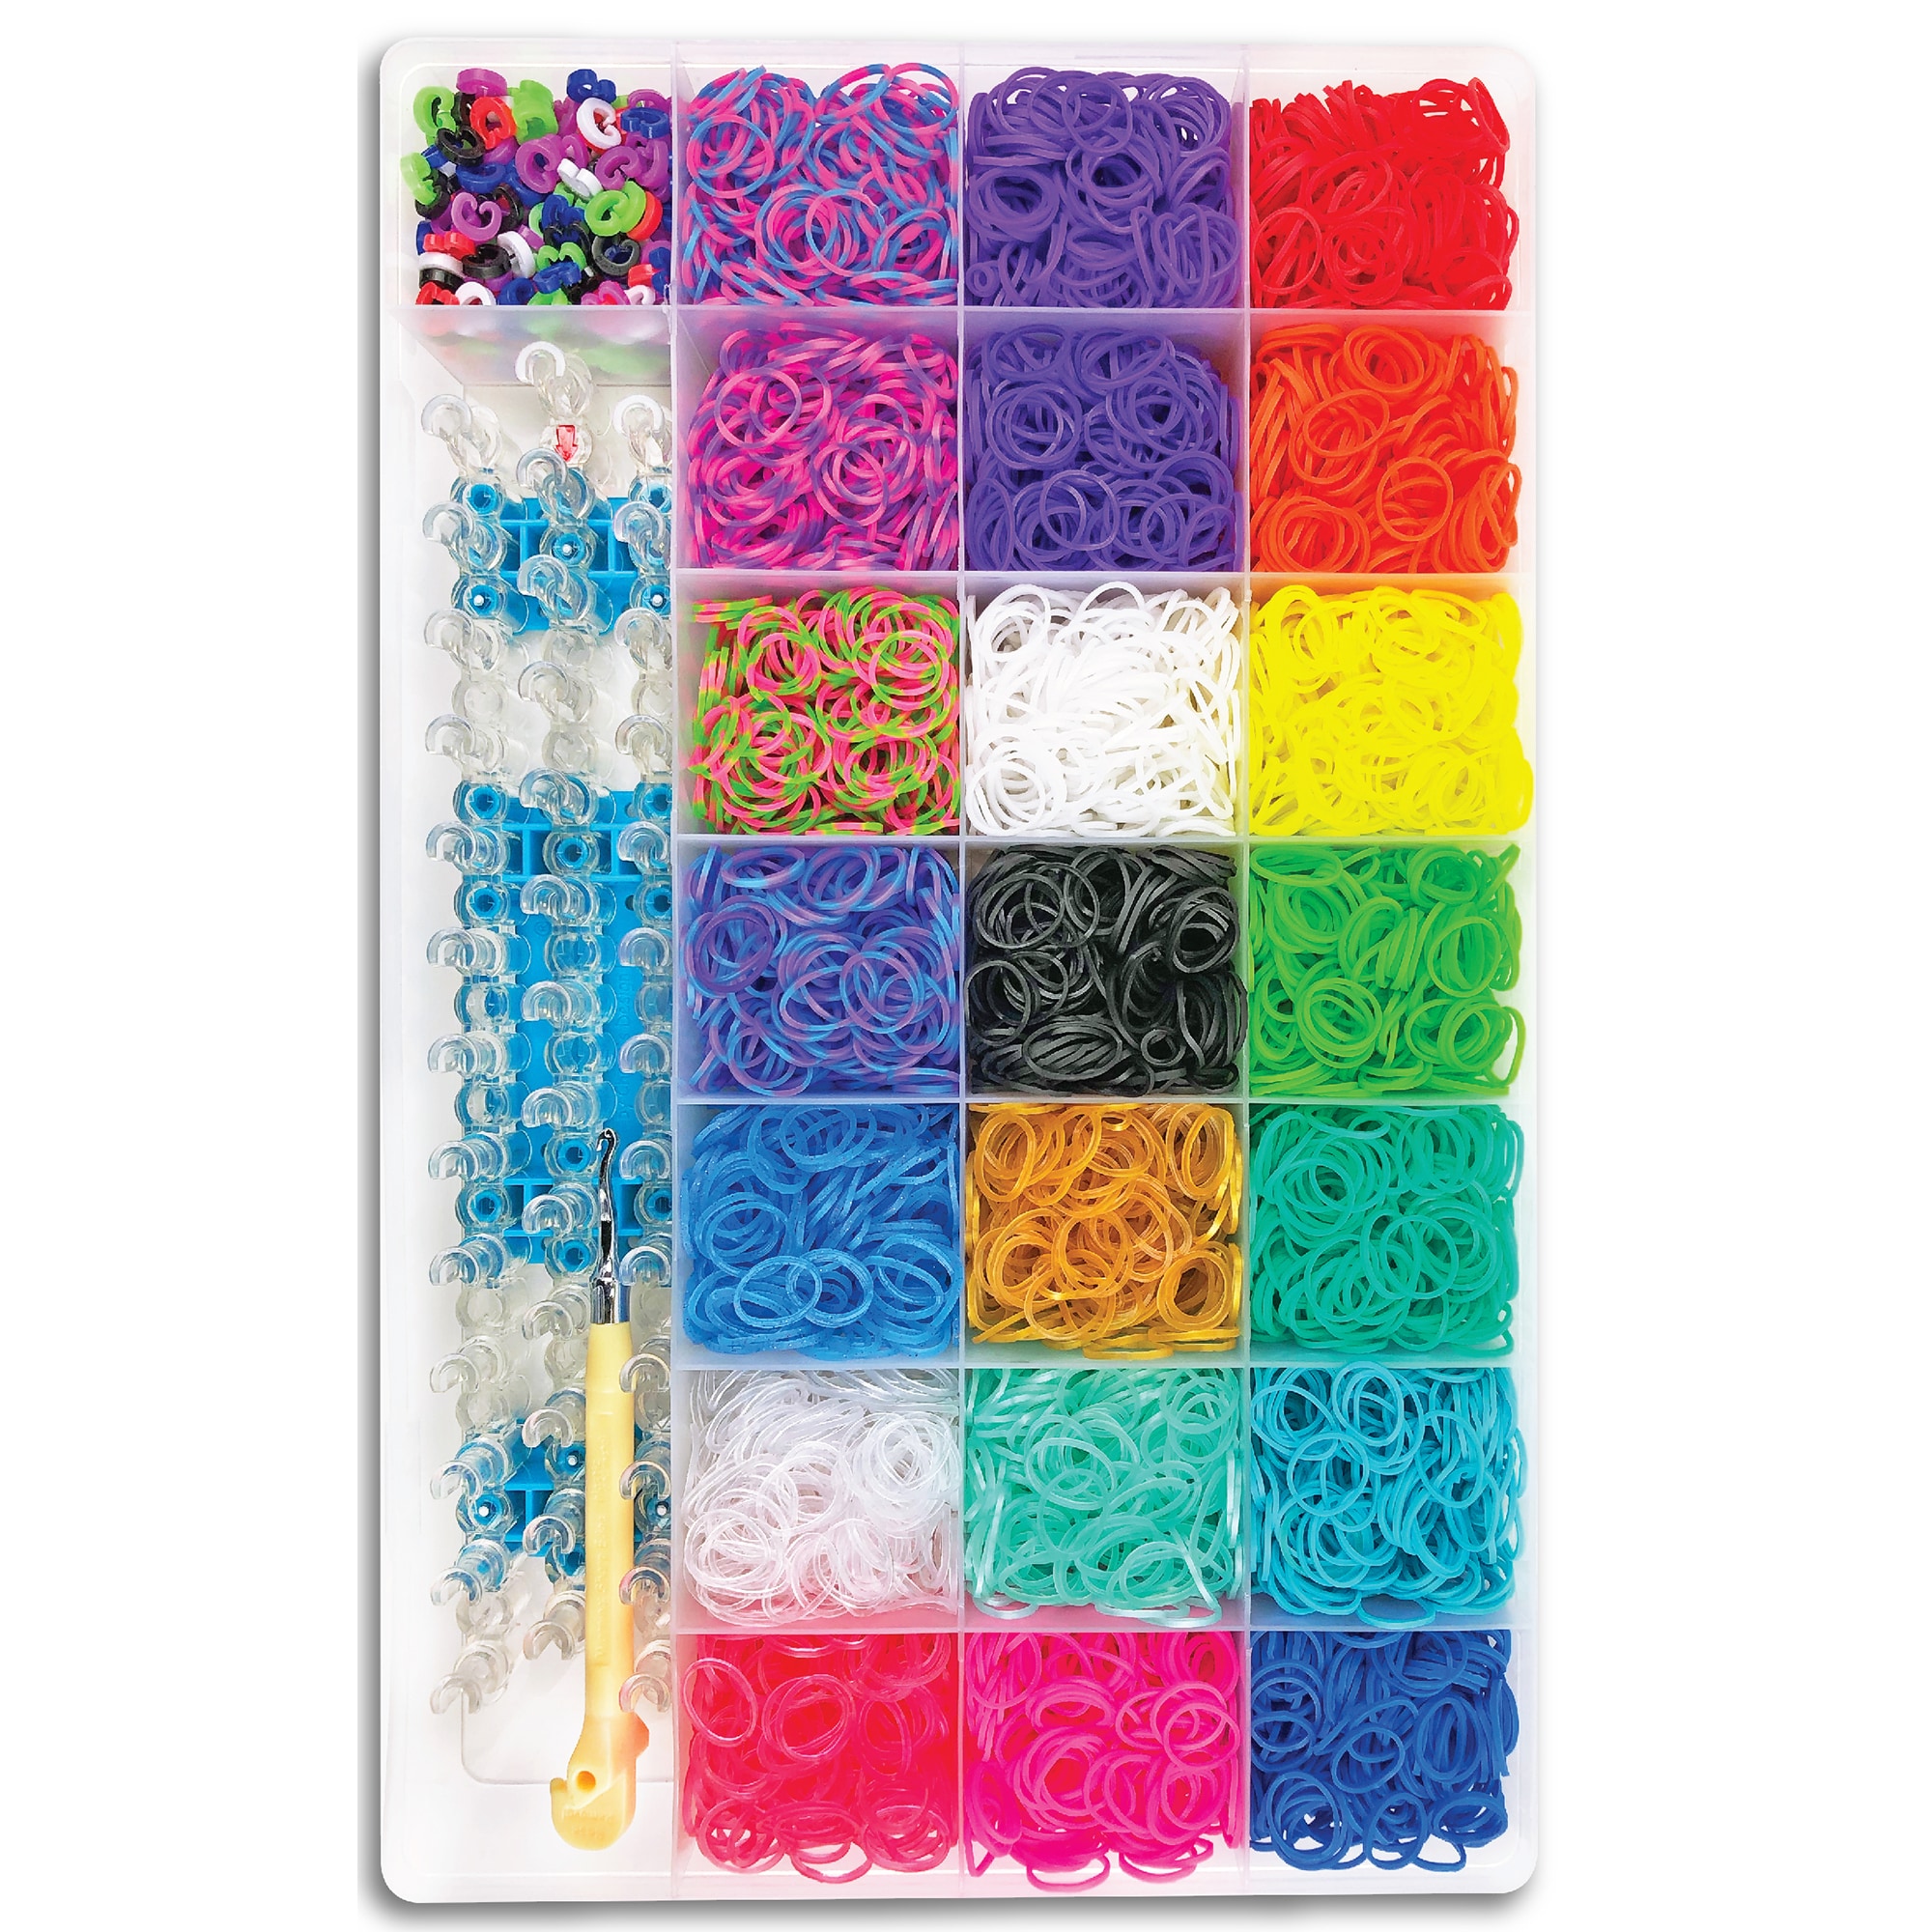 Rainbow Loom Mega Combo Set - Creative Play Kit with 7,000 Rubber